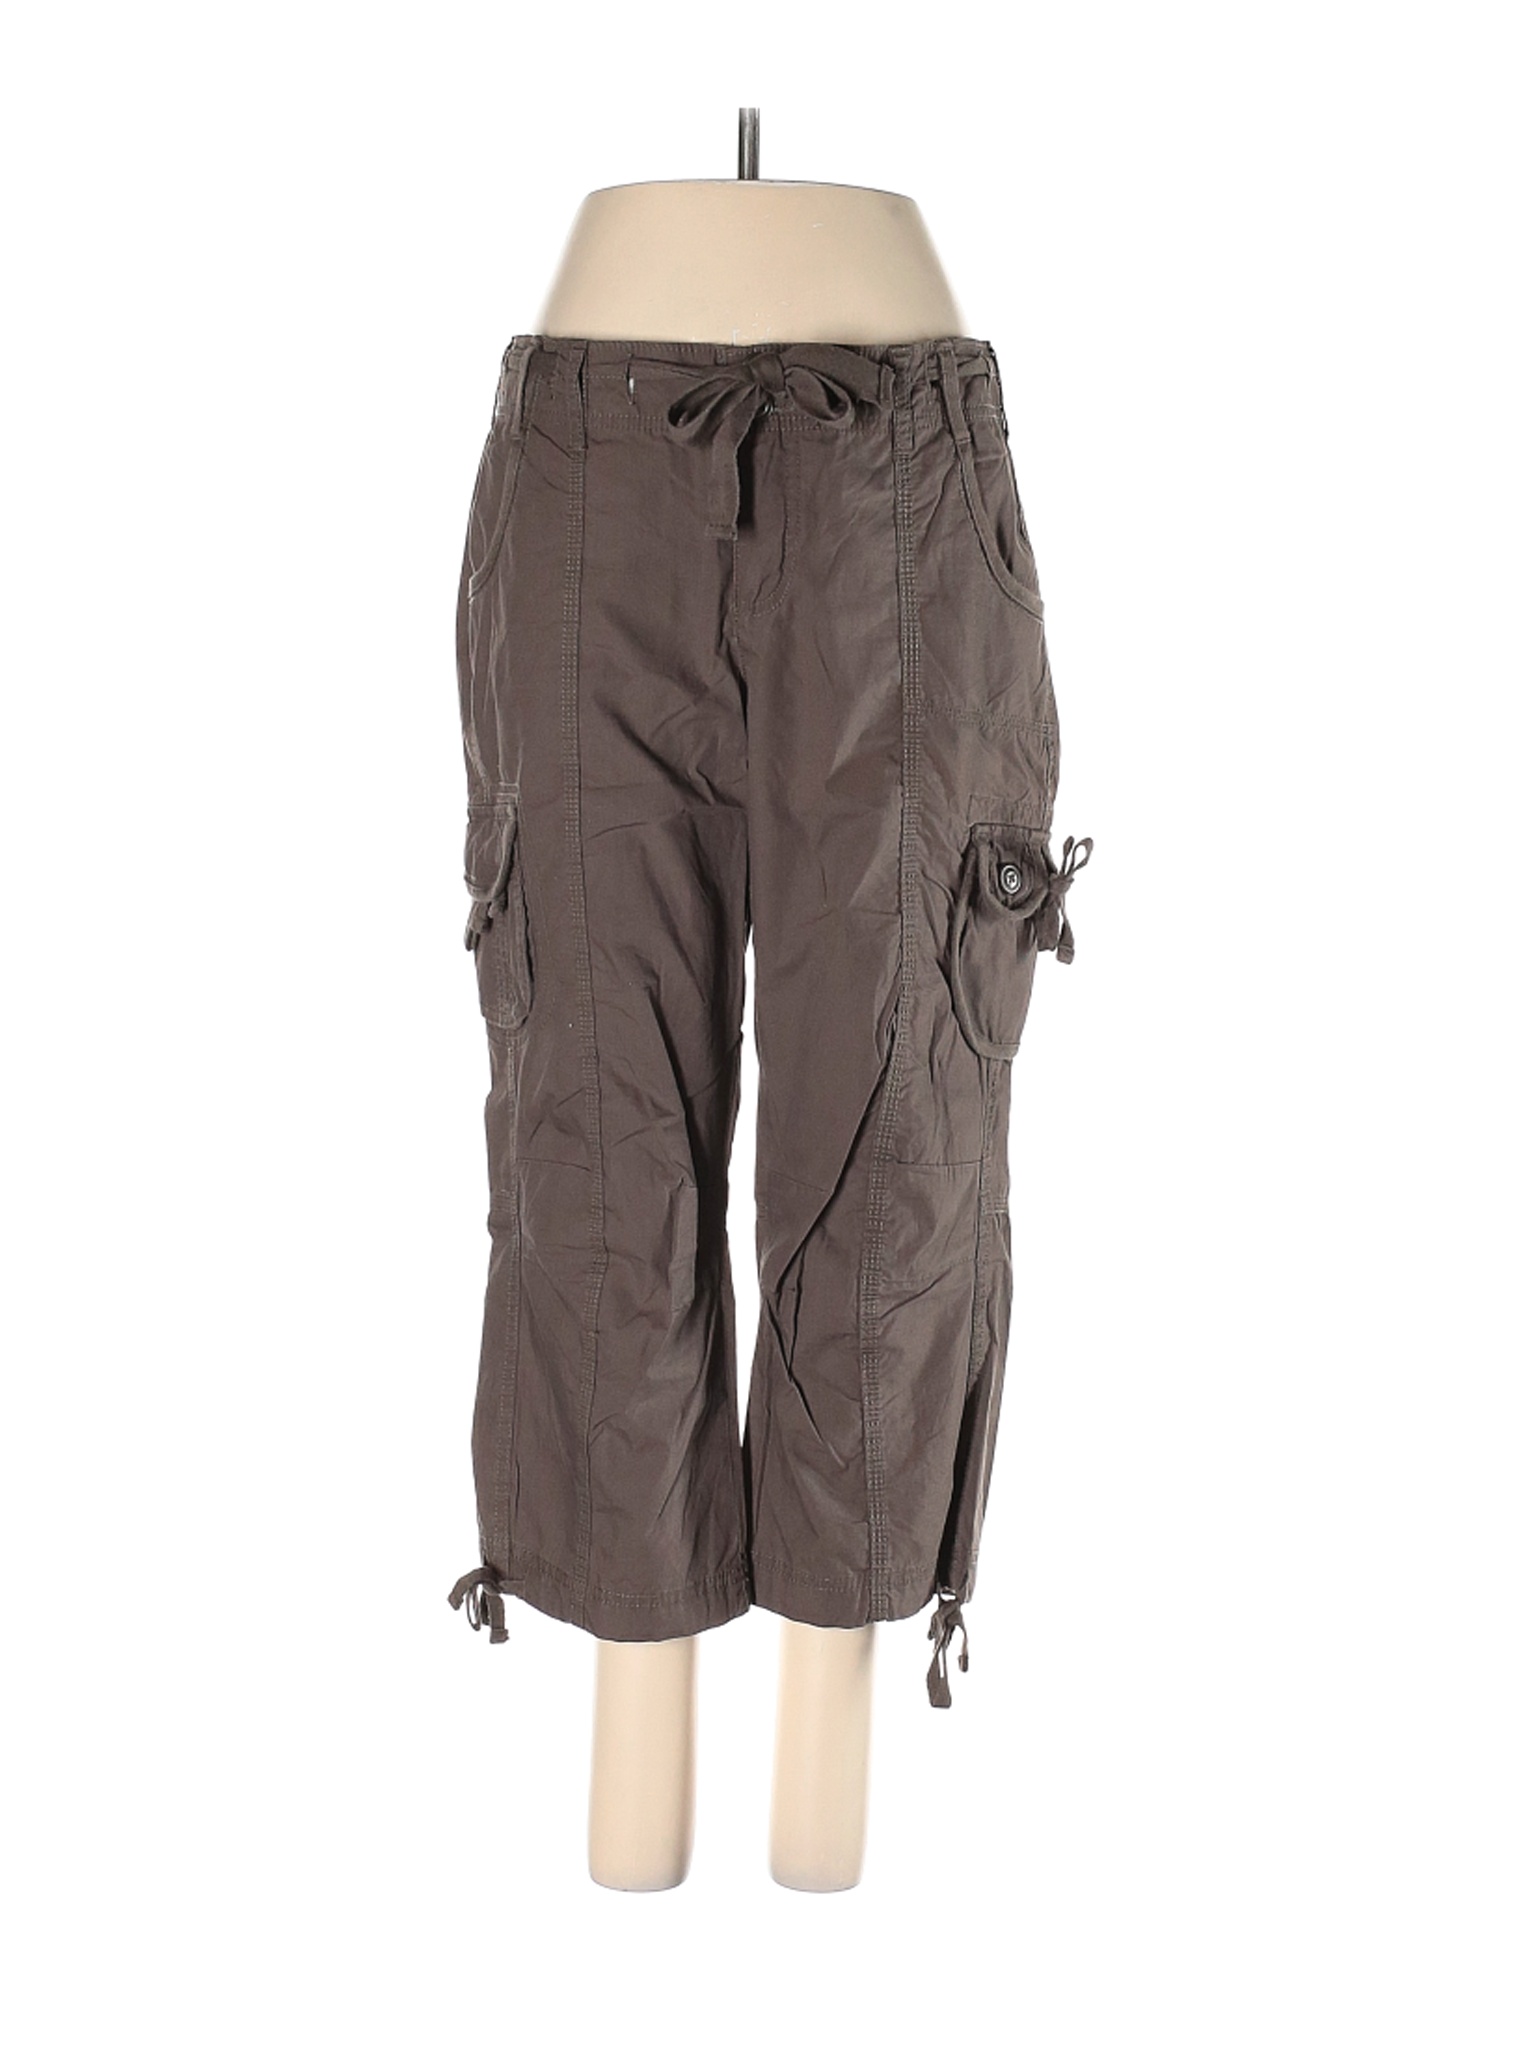 Calvin Klein Performance Women Brown Cargo Pants S | eBay